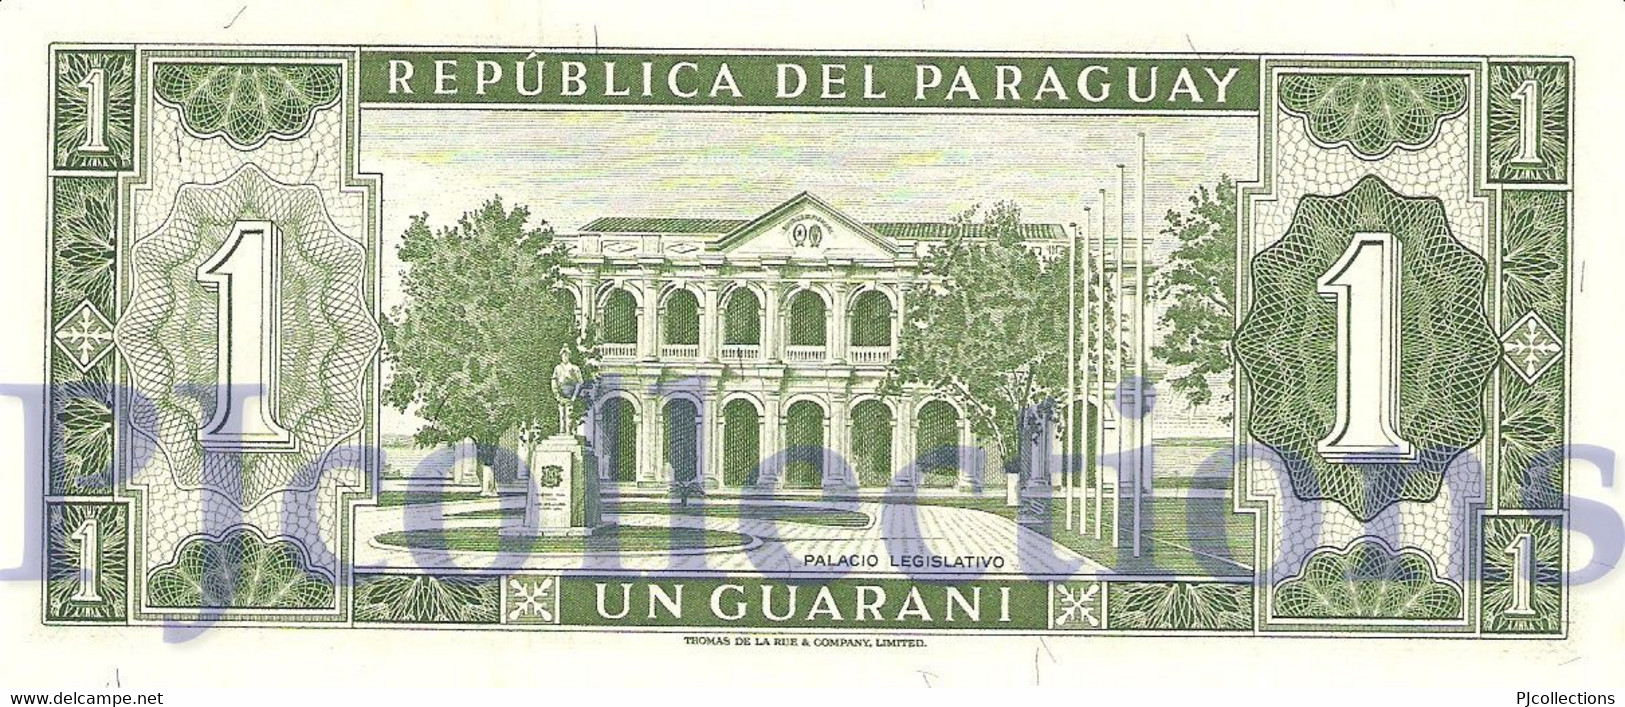 PARAGUAY 1 GUARANI 1952 PICK 193b UNC - Paraguay